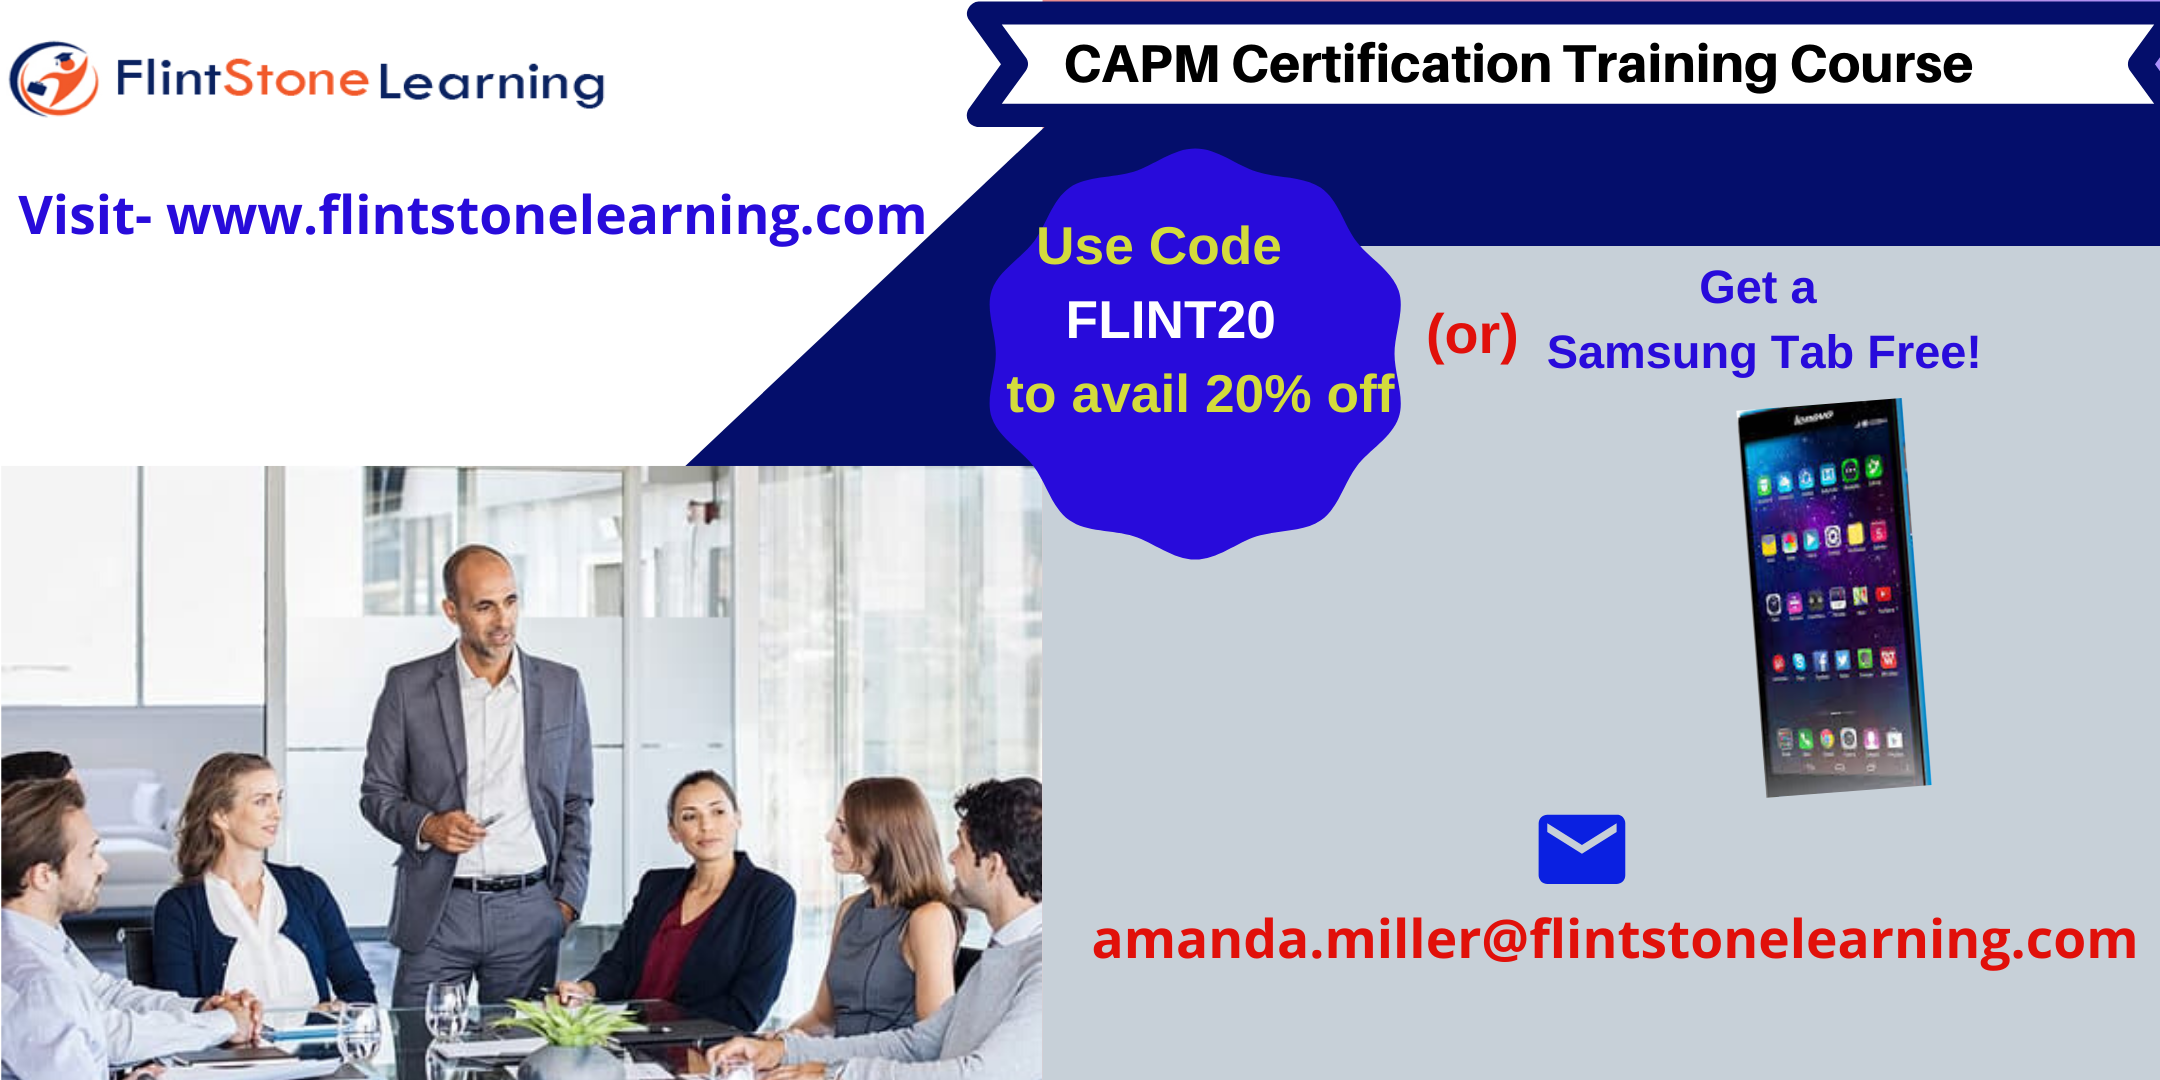 CAPM Certification Training Course in Peoria, AZ